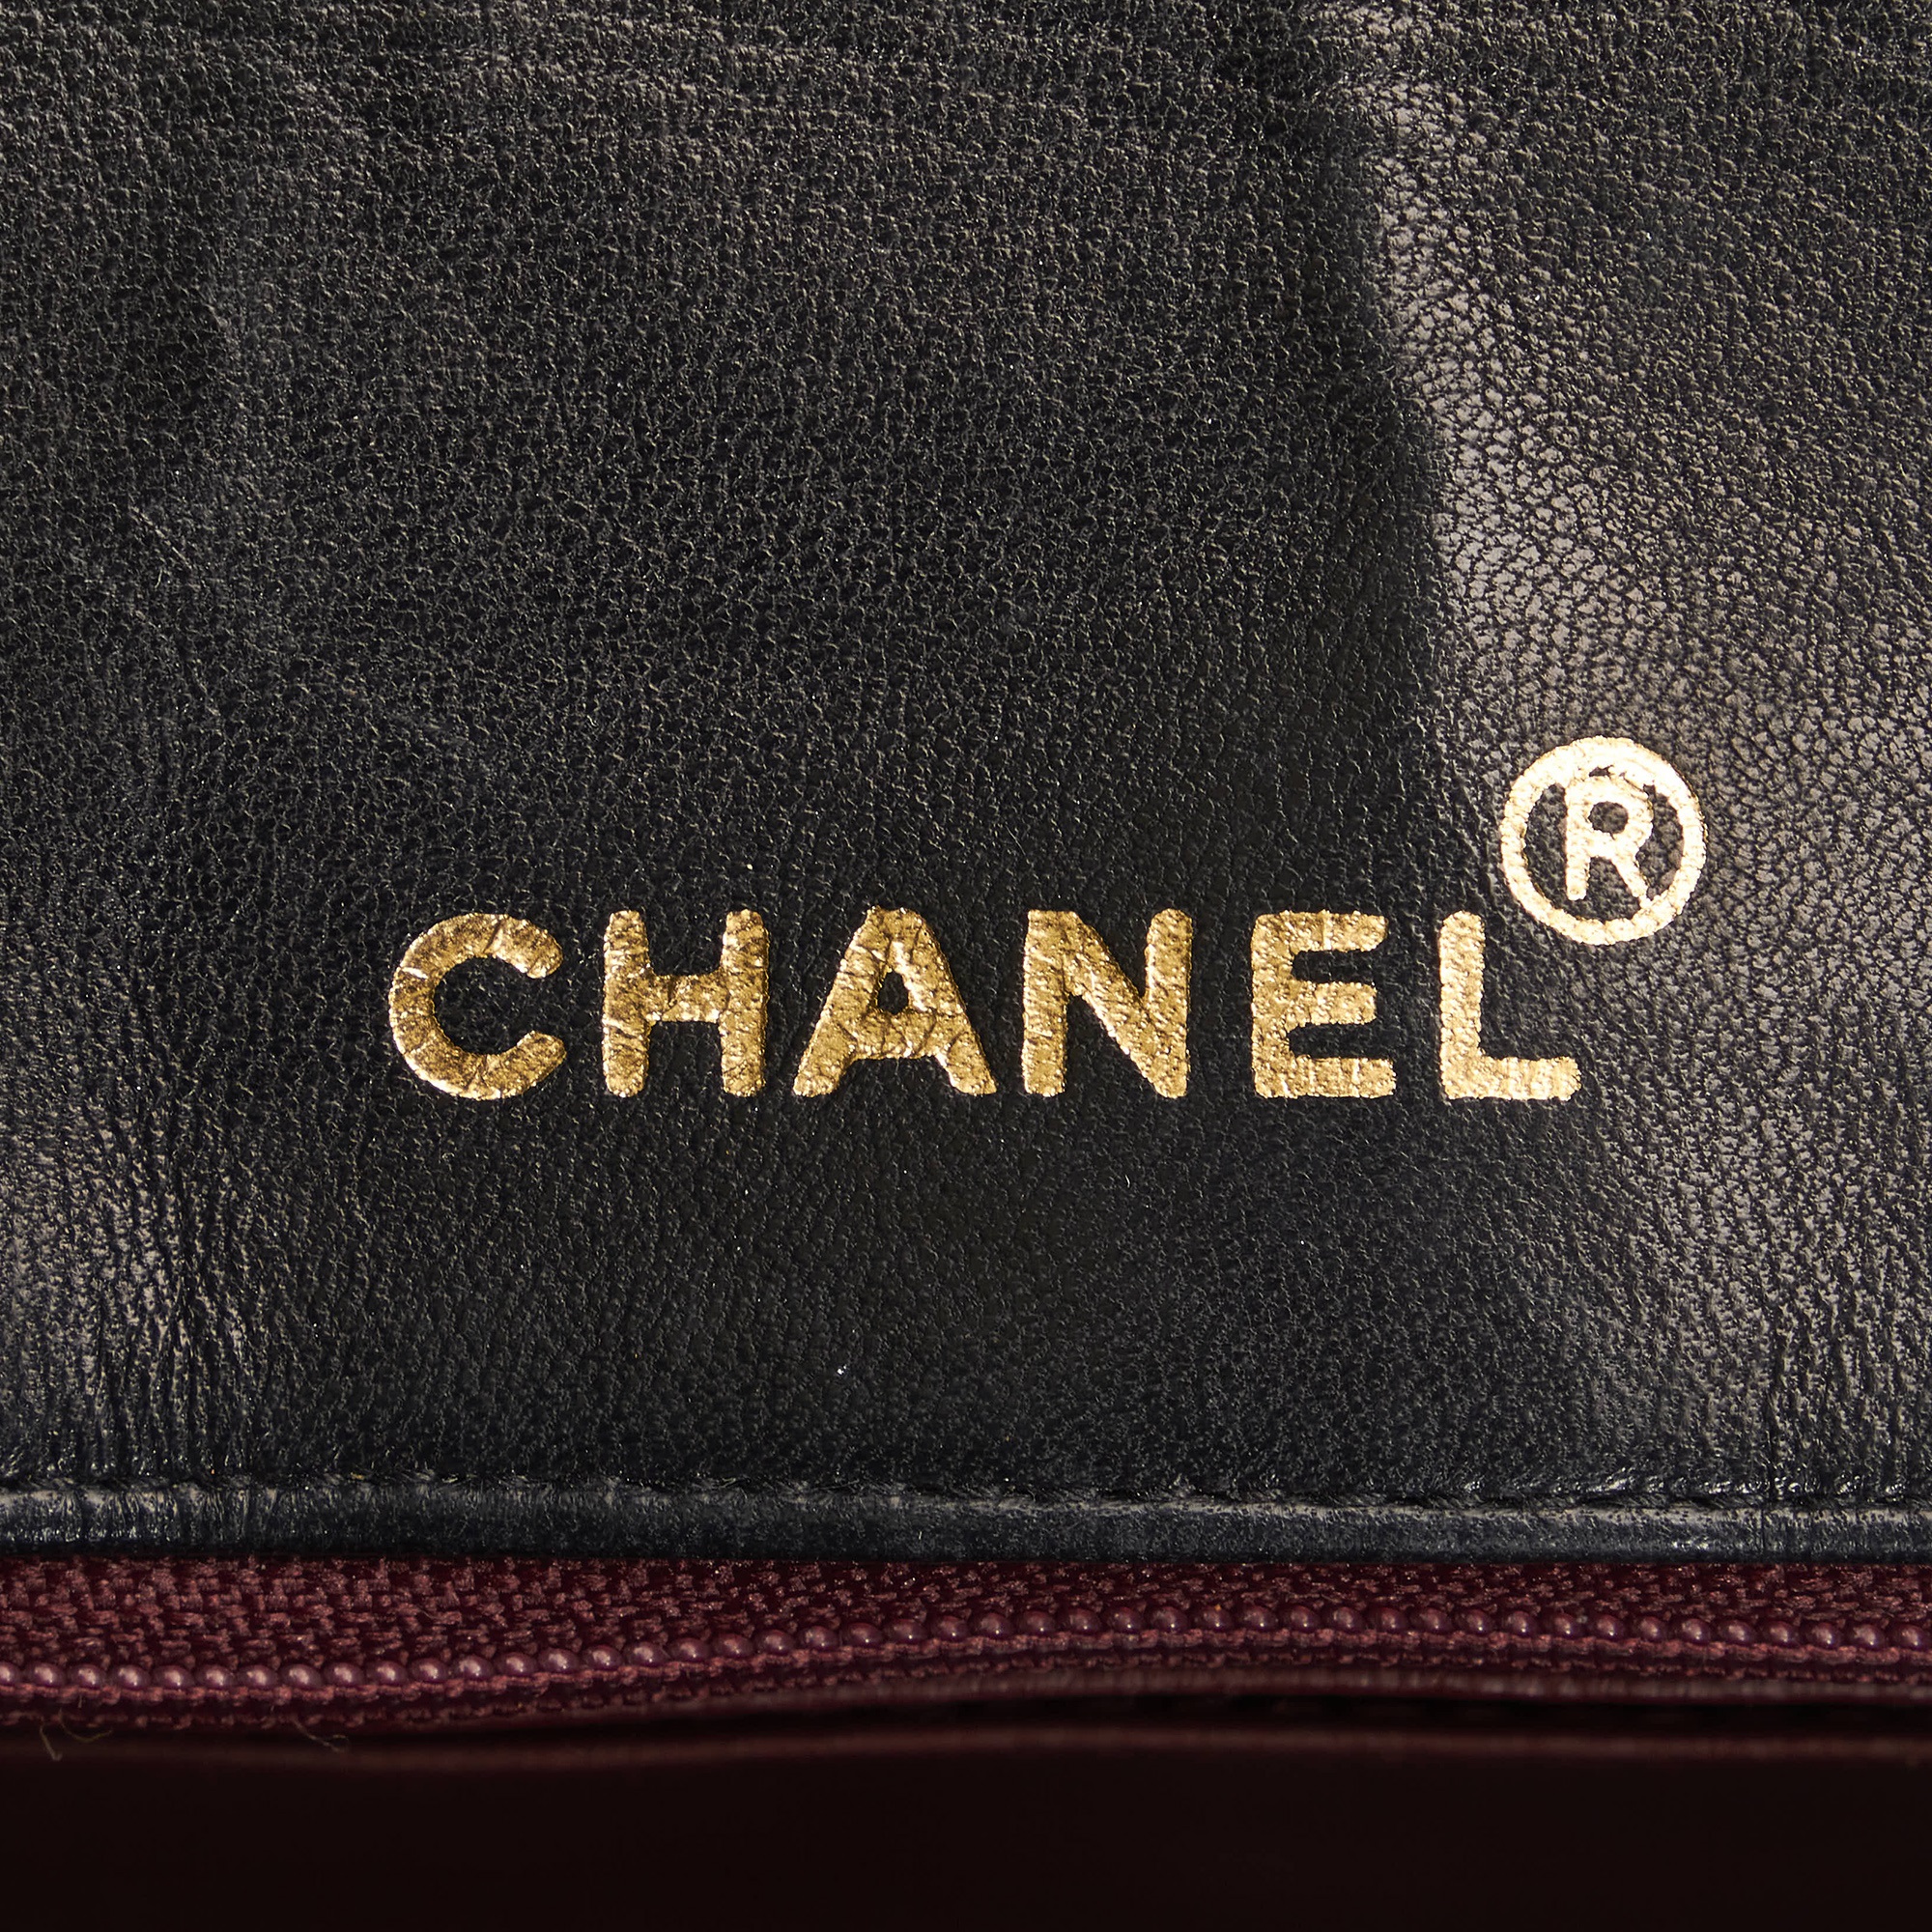 Chanel Black Medium Diana Flap Lambskin Leather Crossbody Bag